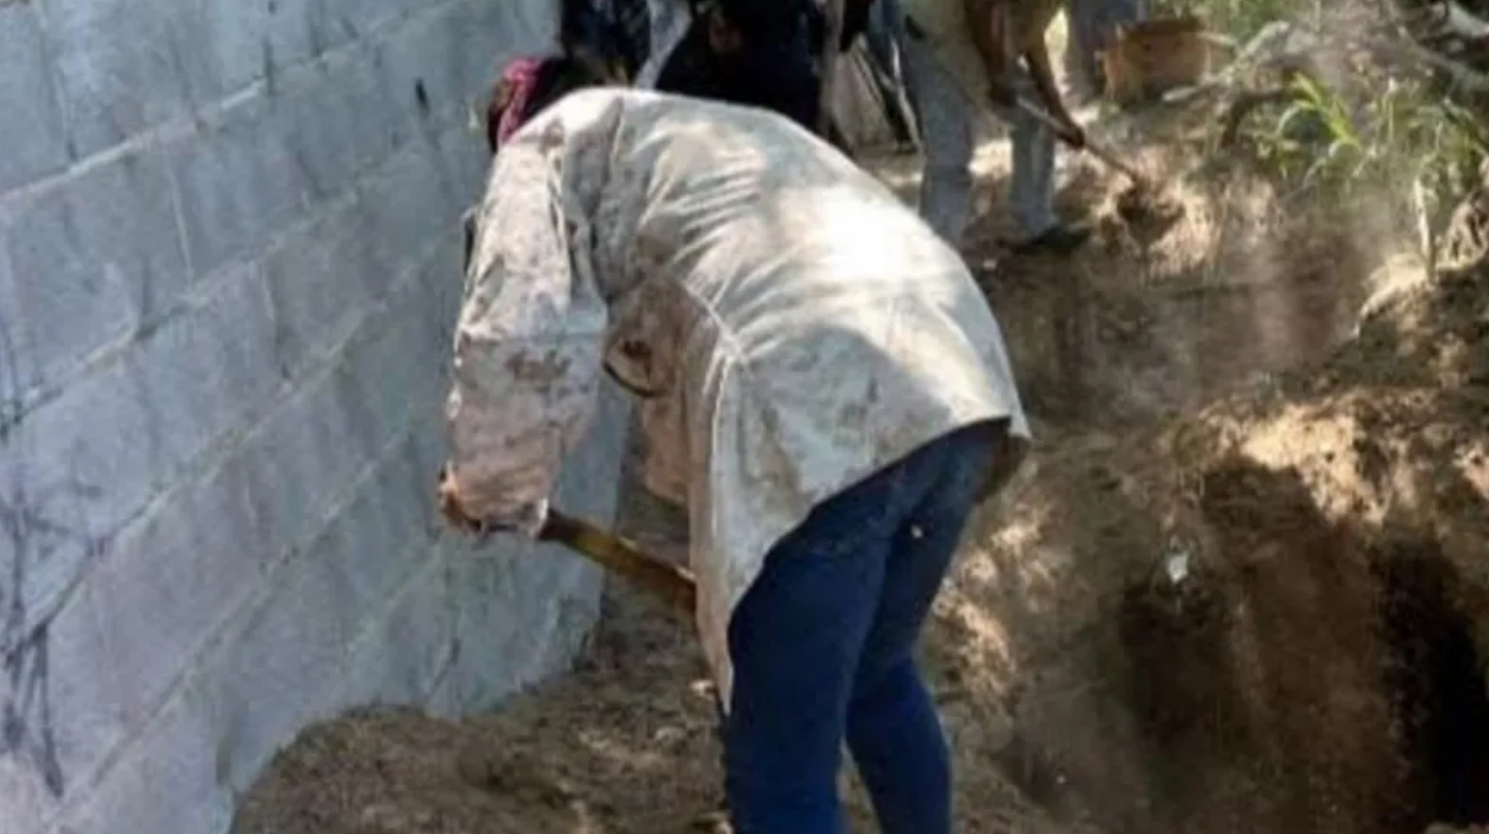 Suman 27 osamentas recuperadas de fosas clandestinas en Reynosa